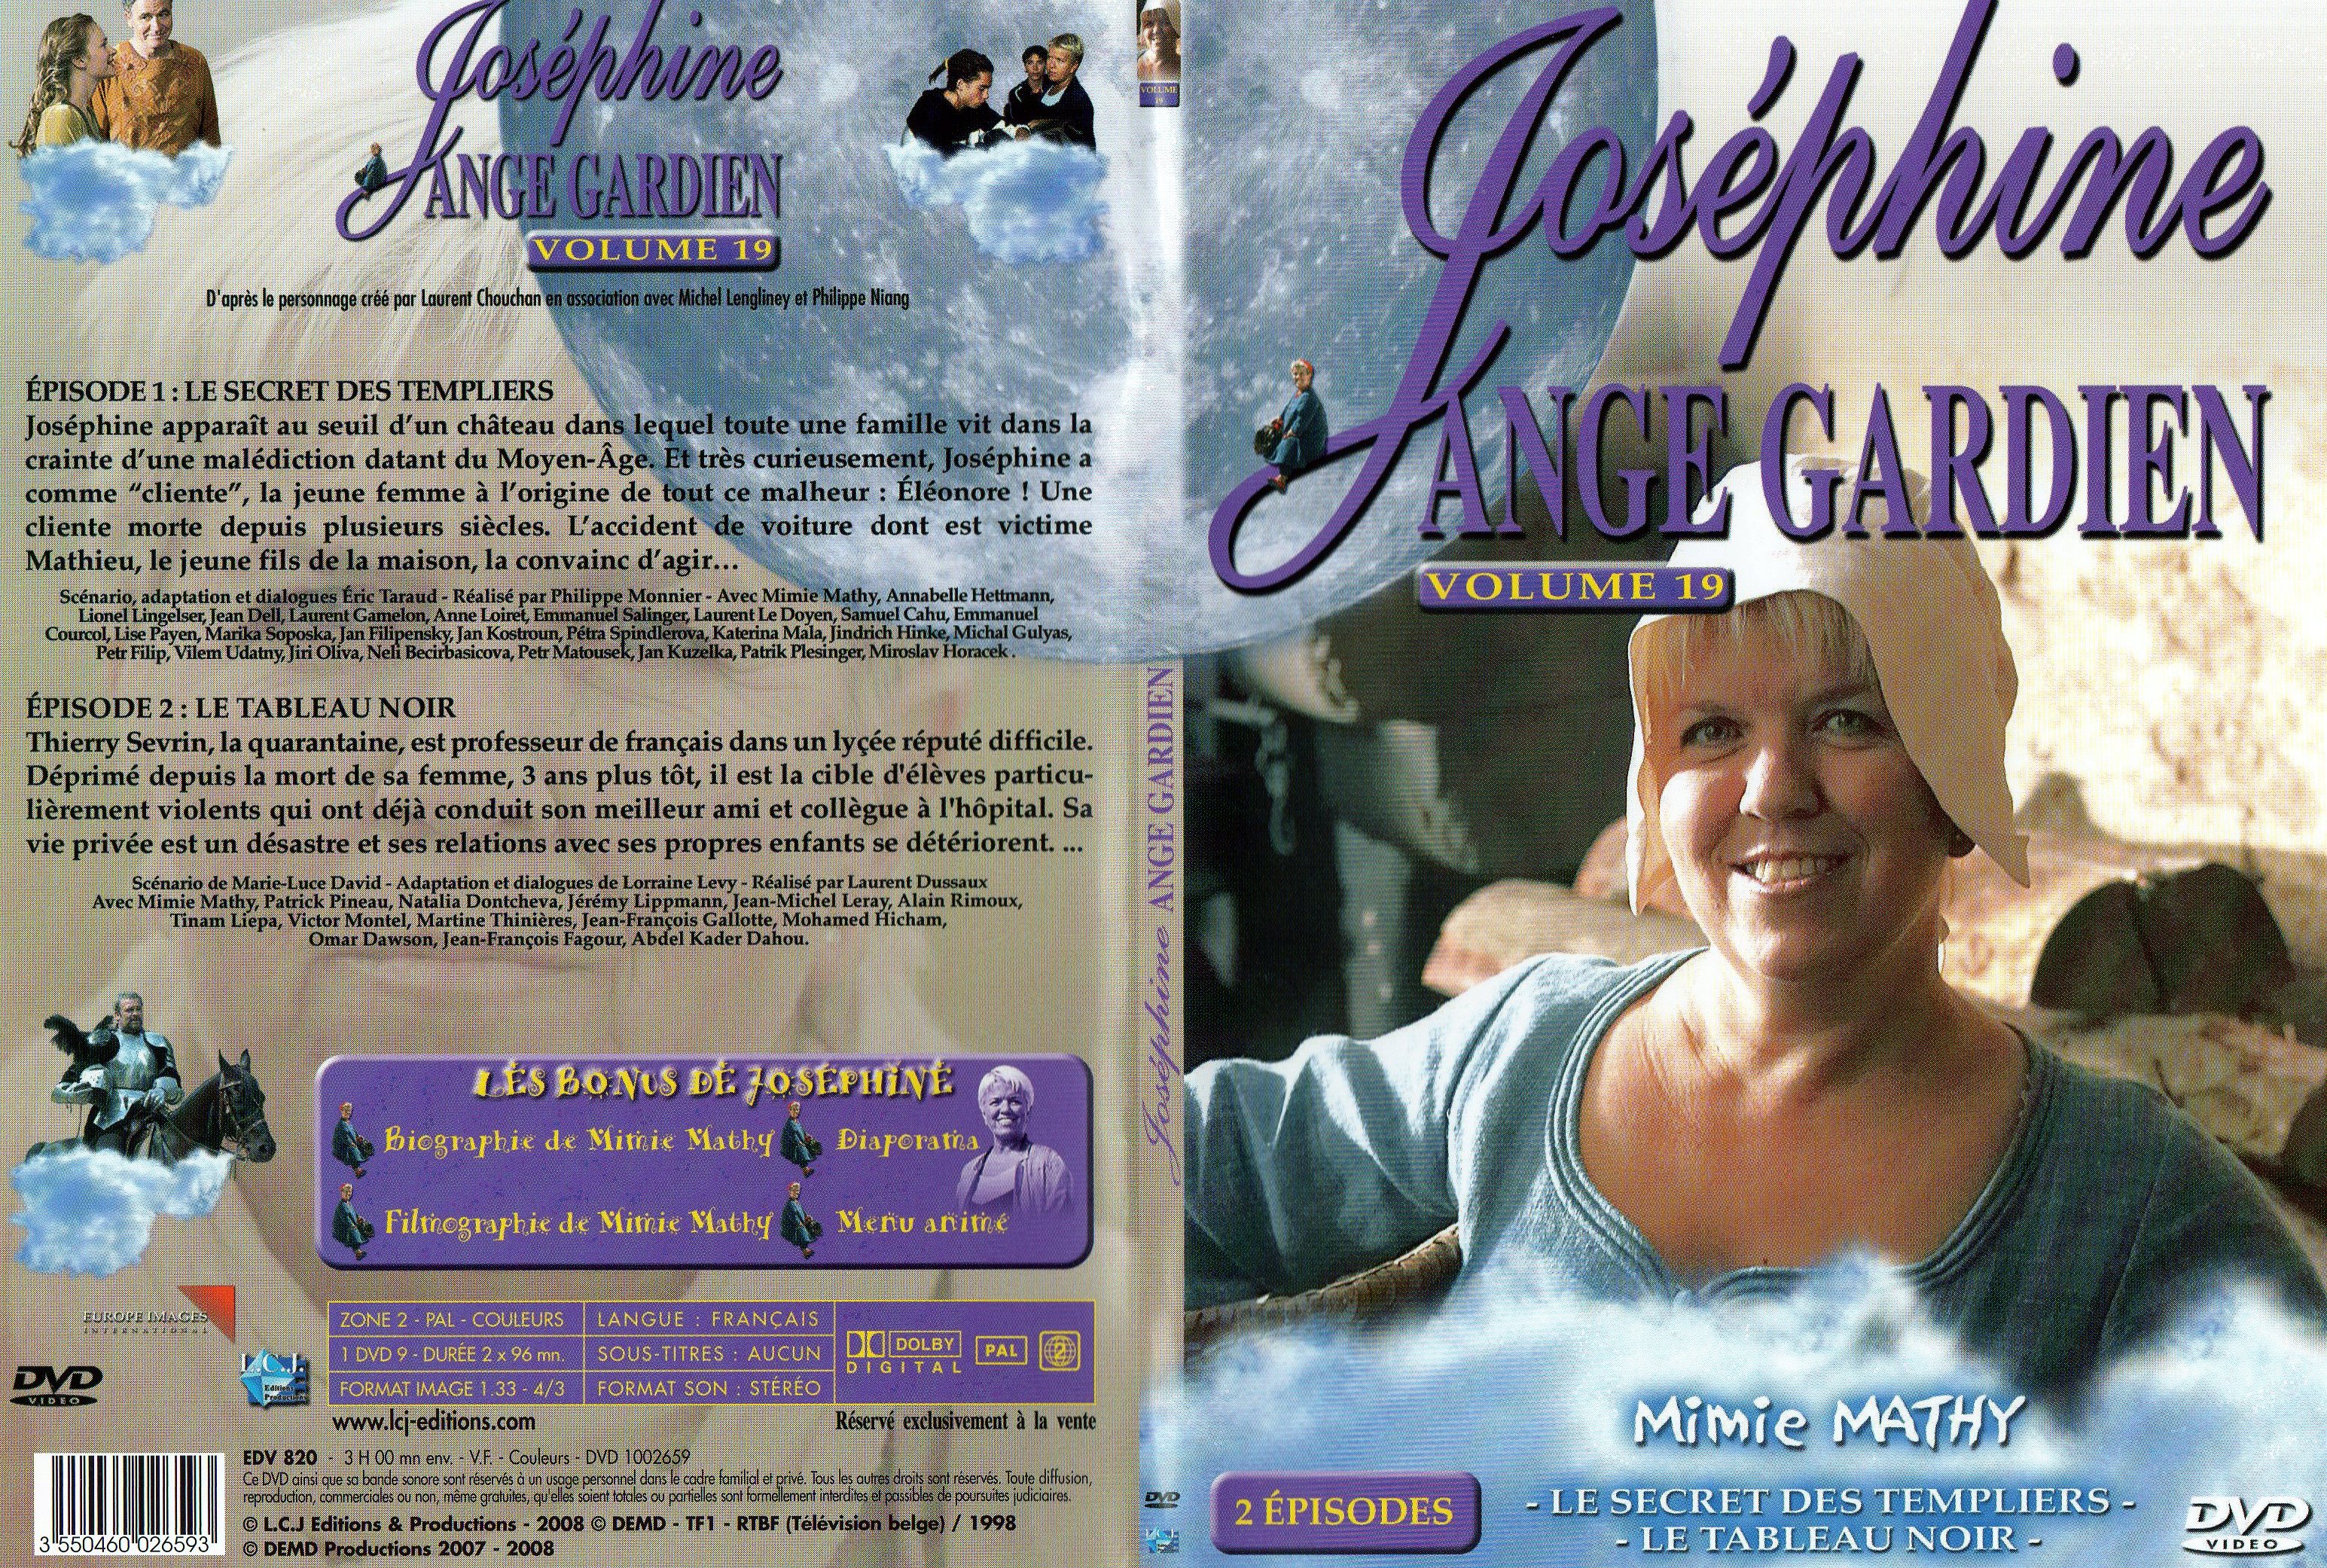 Jaquette DVD Josphine Ange Gardien saison 4 DVD 19